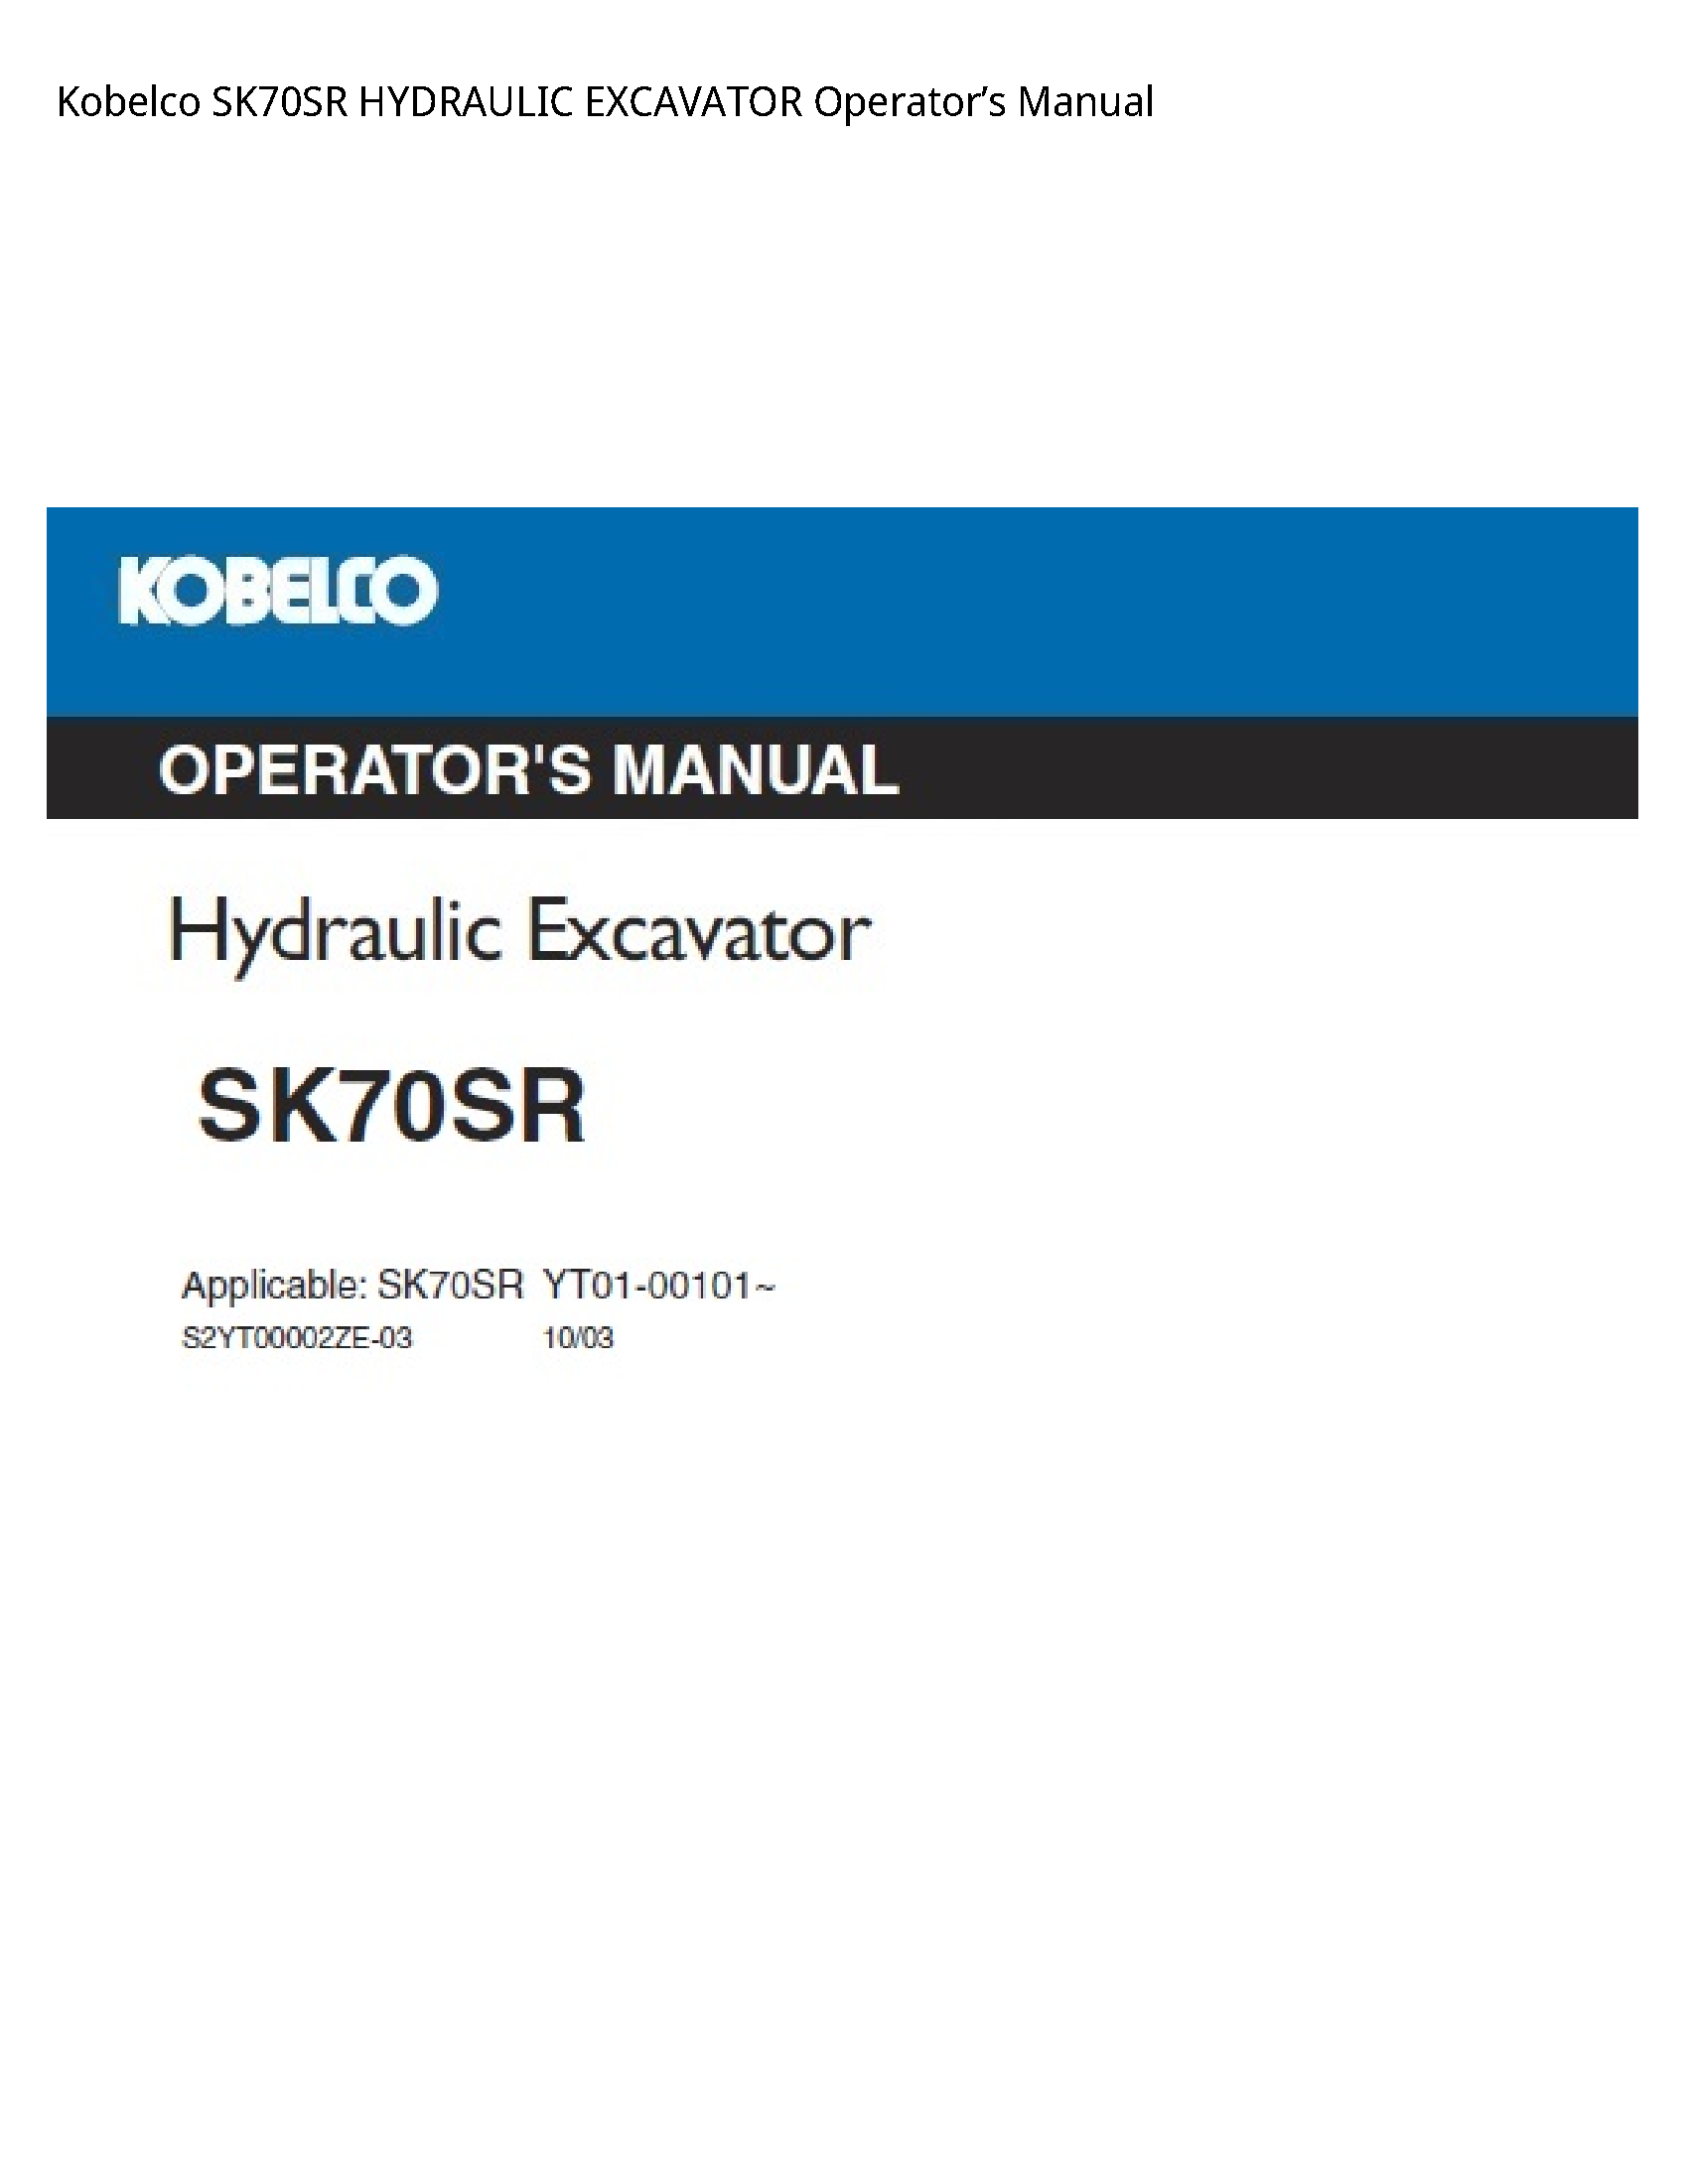 Kobelco SK70SR HYDRAULIC EXCAVATOR Operator’s manual